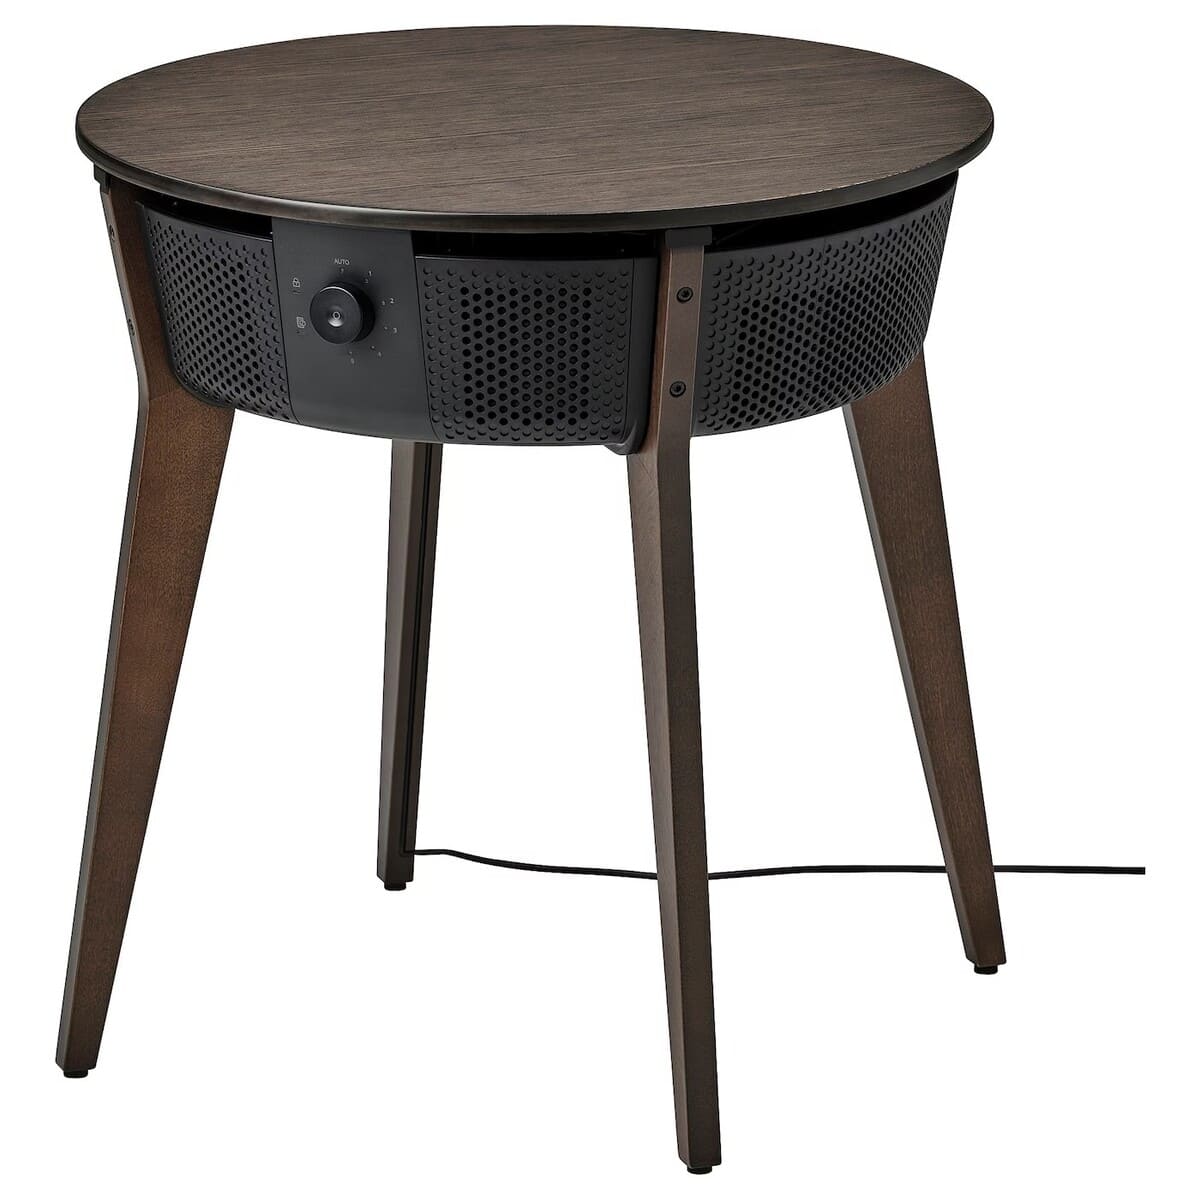 IKEA STARKVIND Table with air purifier